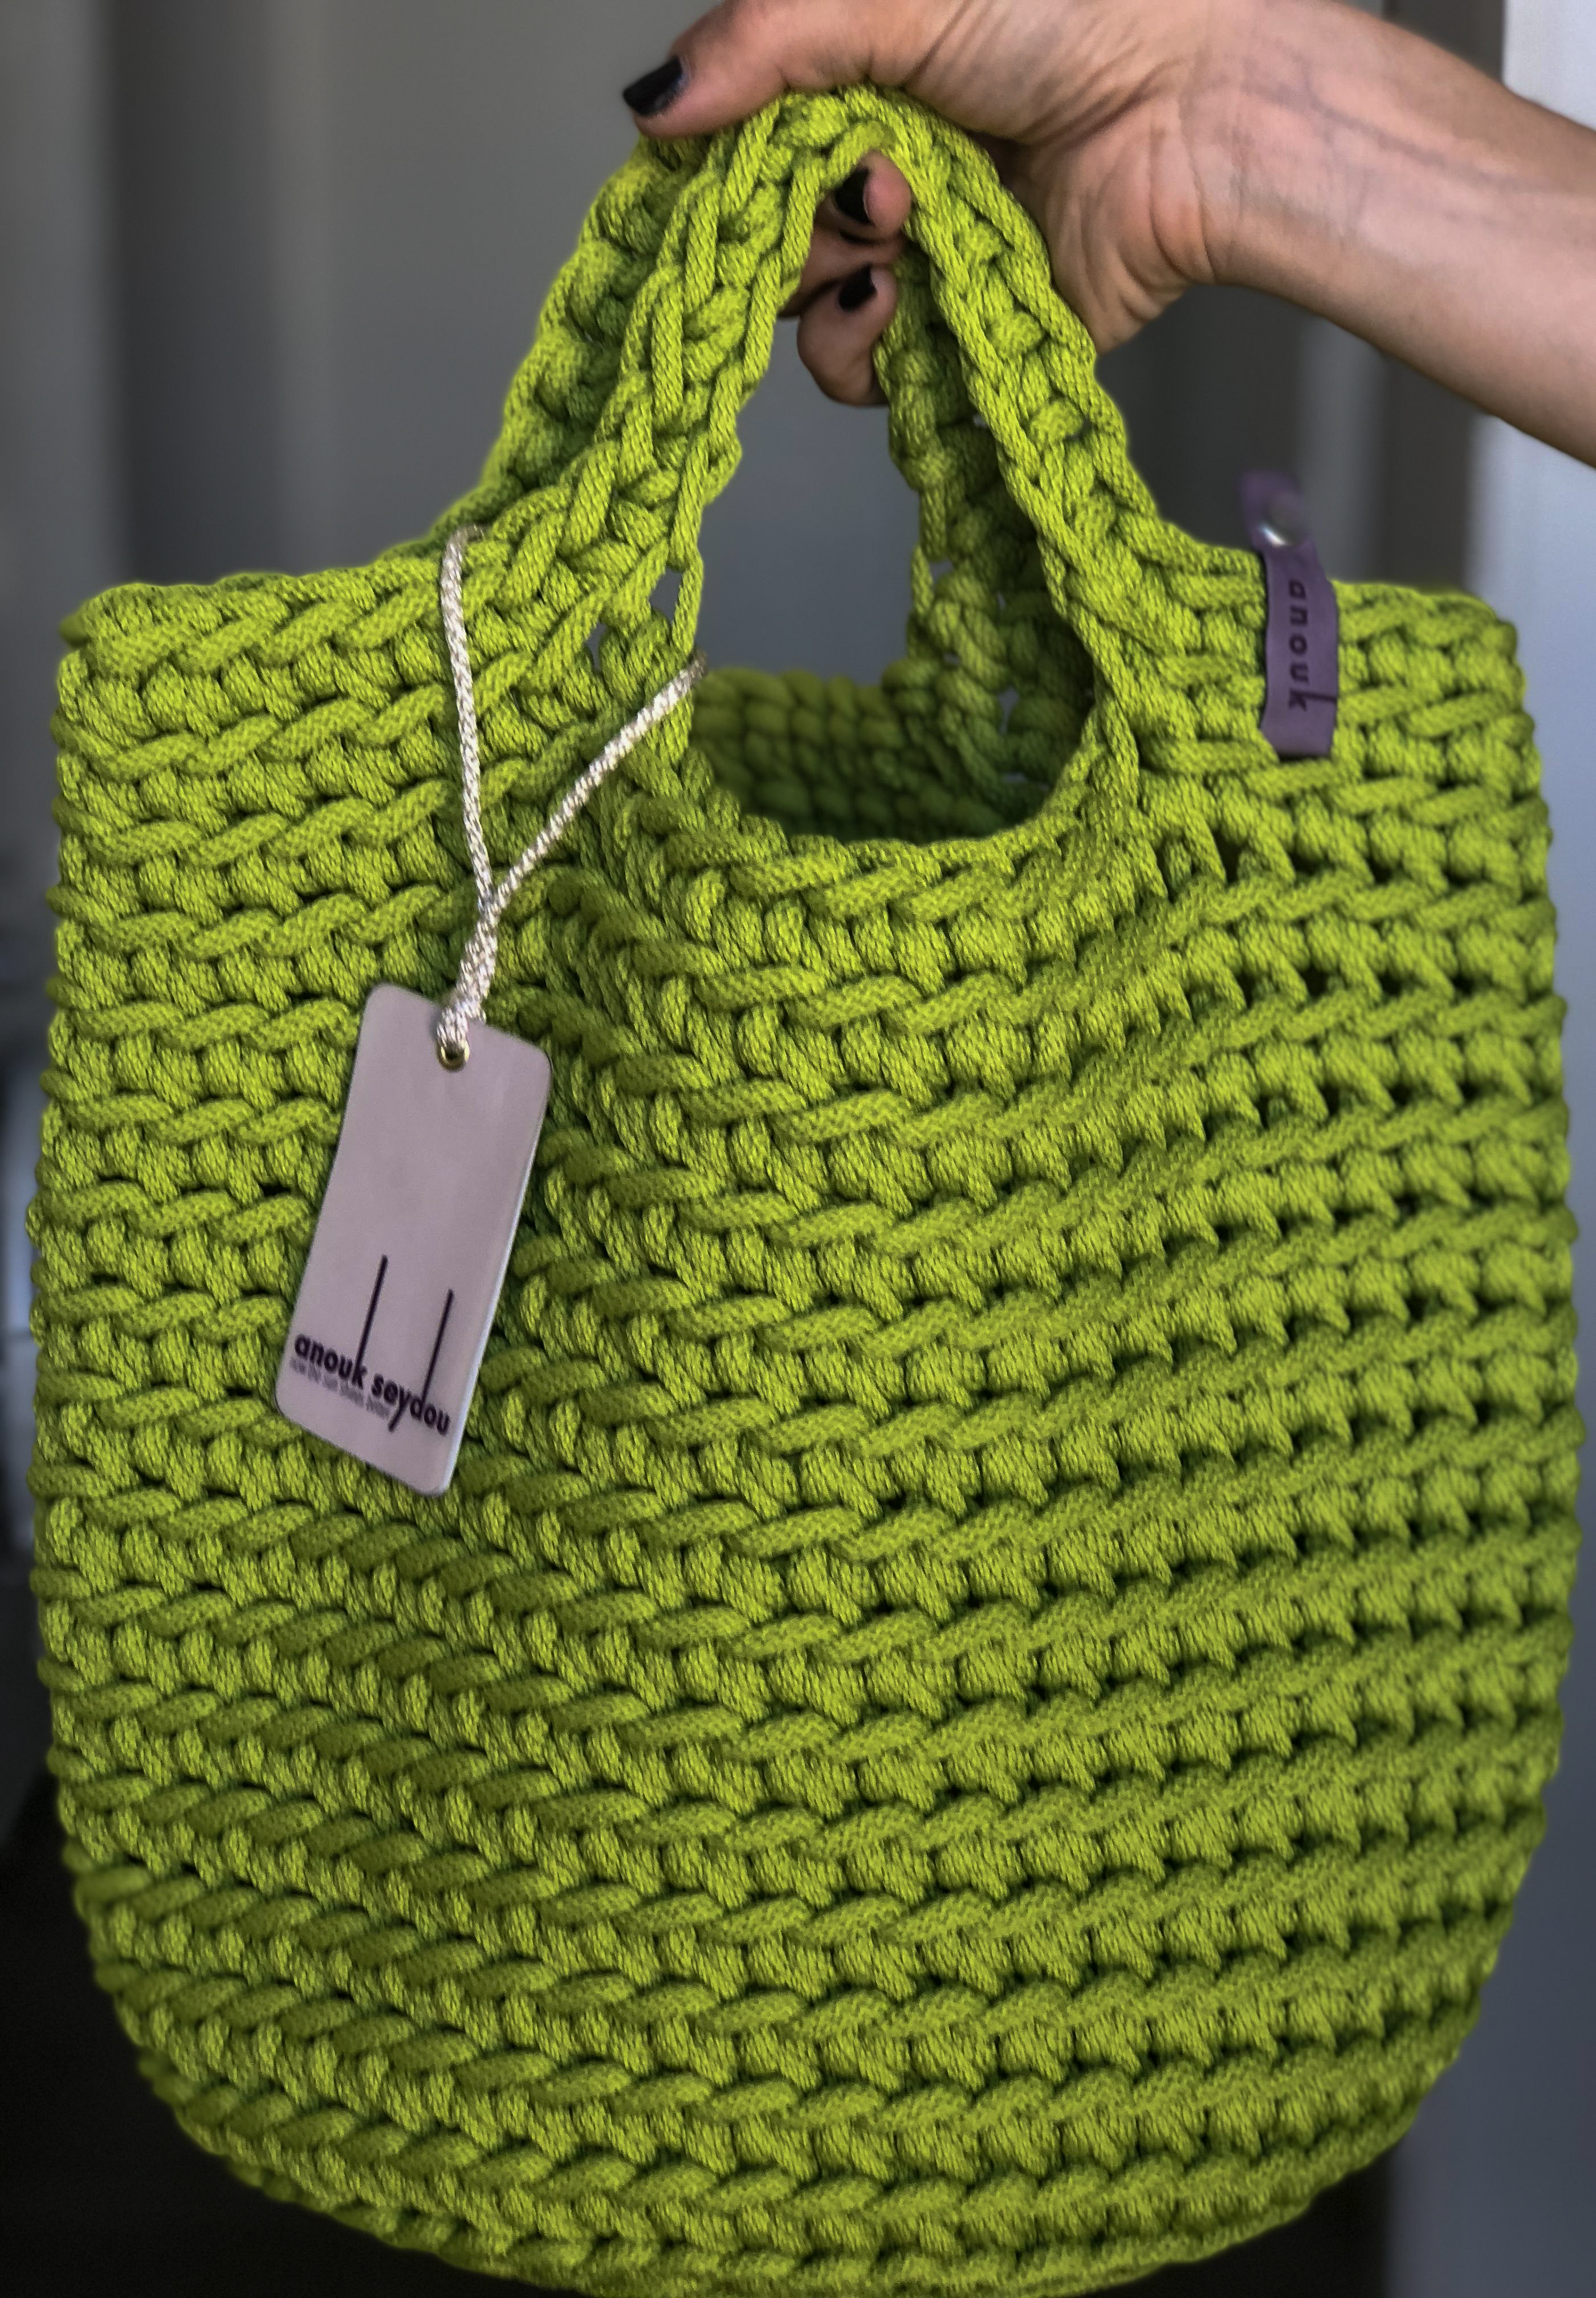 Crochet Tote Bag Free Patterns ~ 30 Easy Crochet Tote Bag Patterns